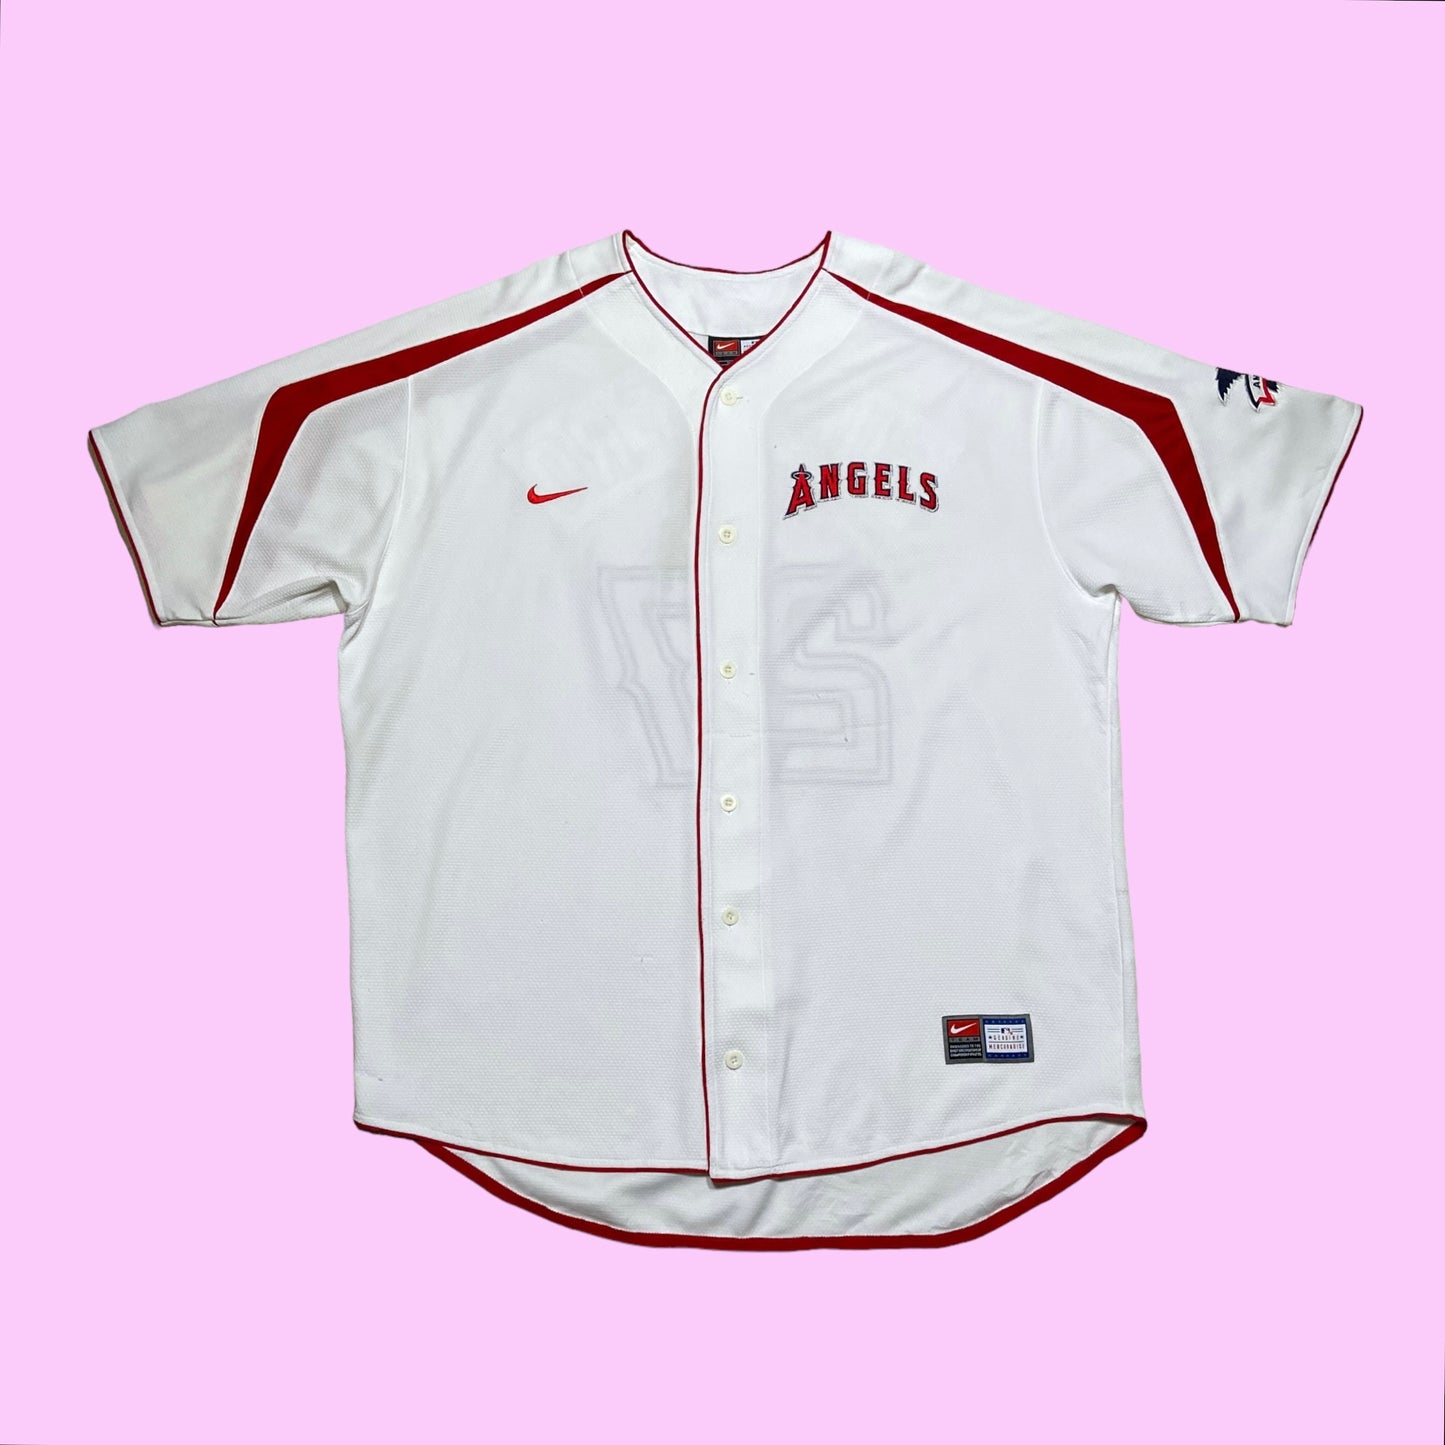 Vintage Nike Angels Guerrero jersey - XL